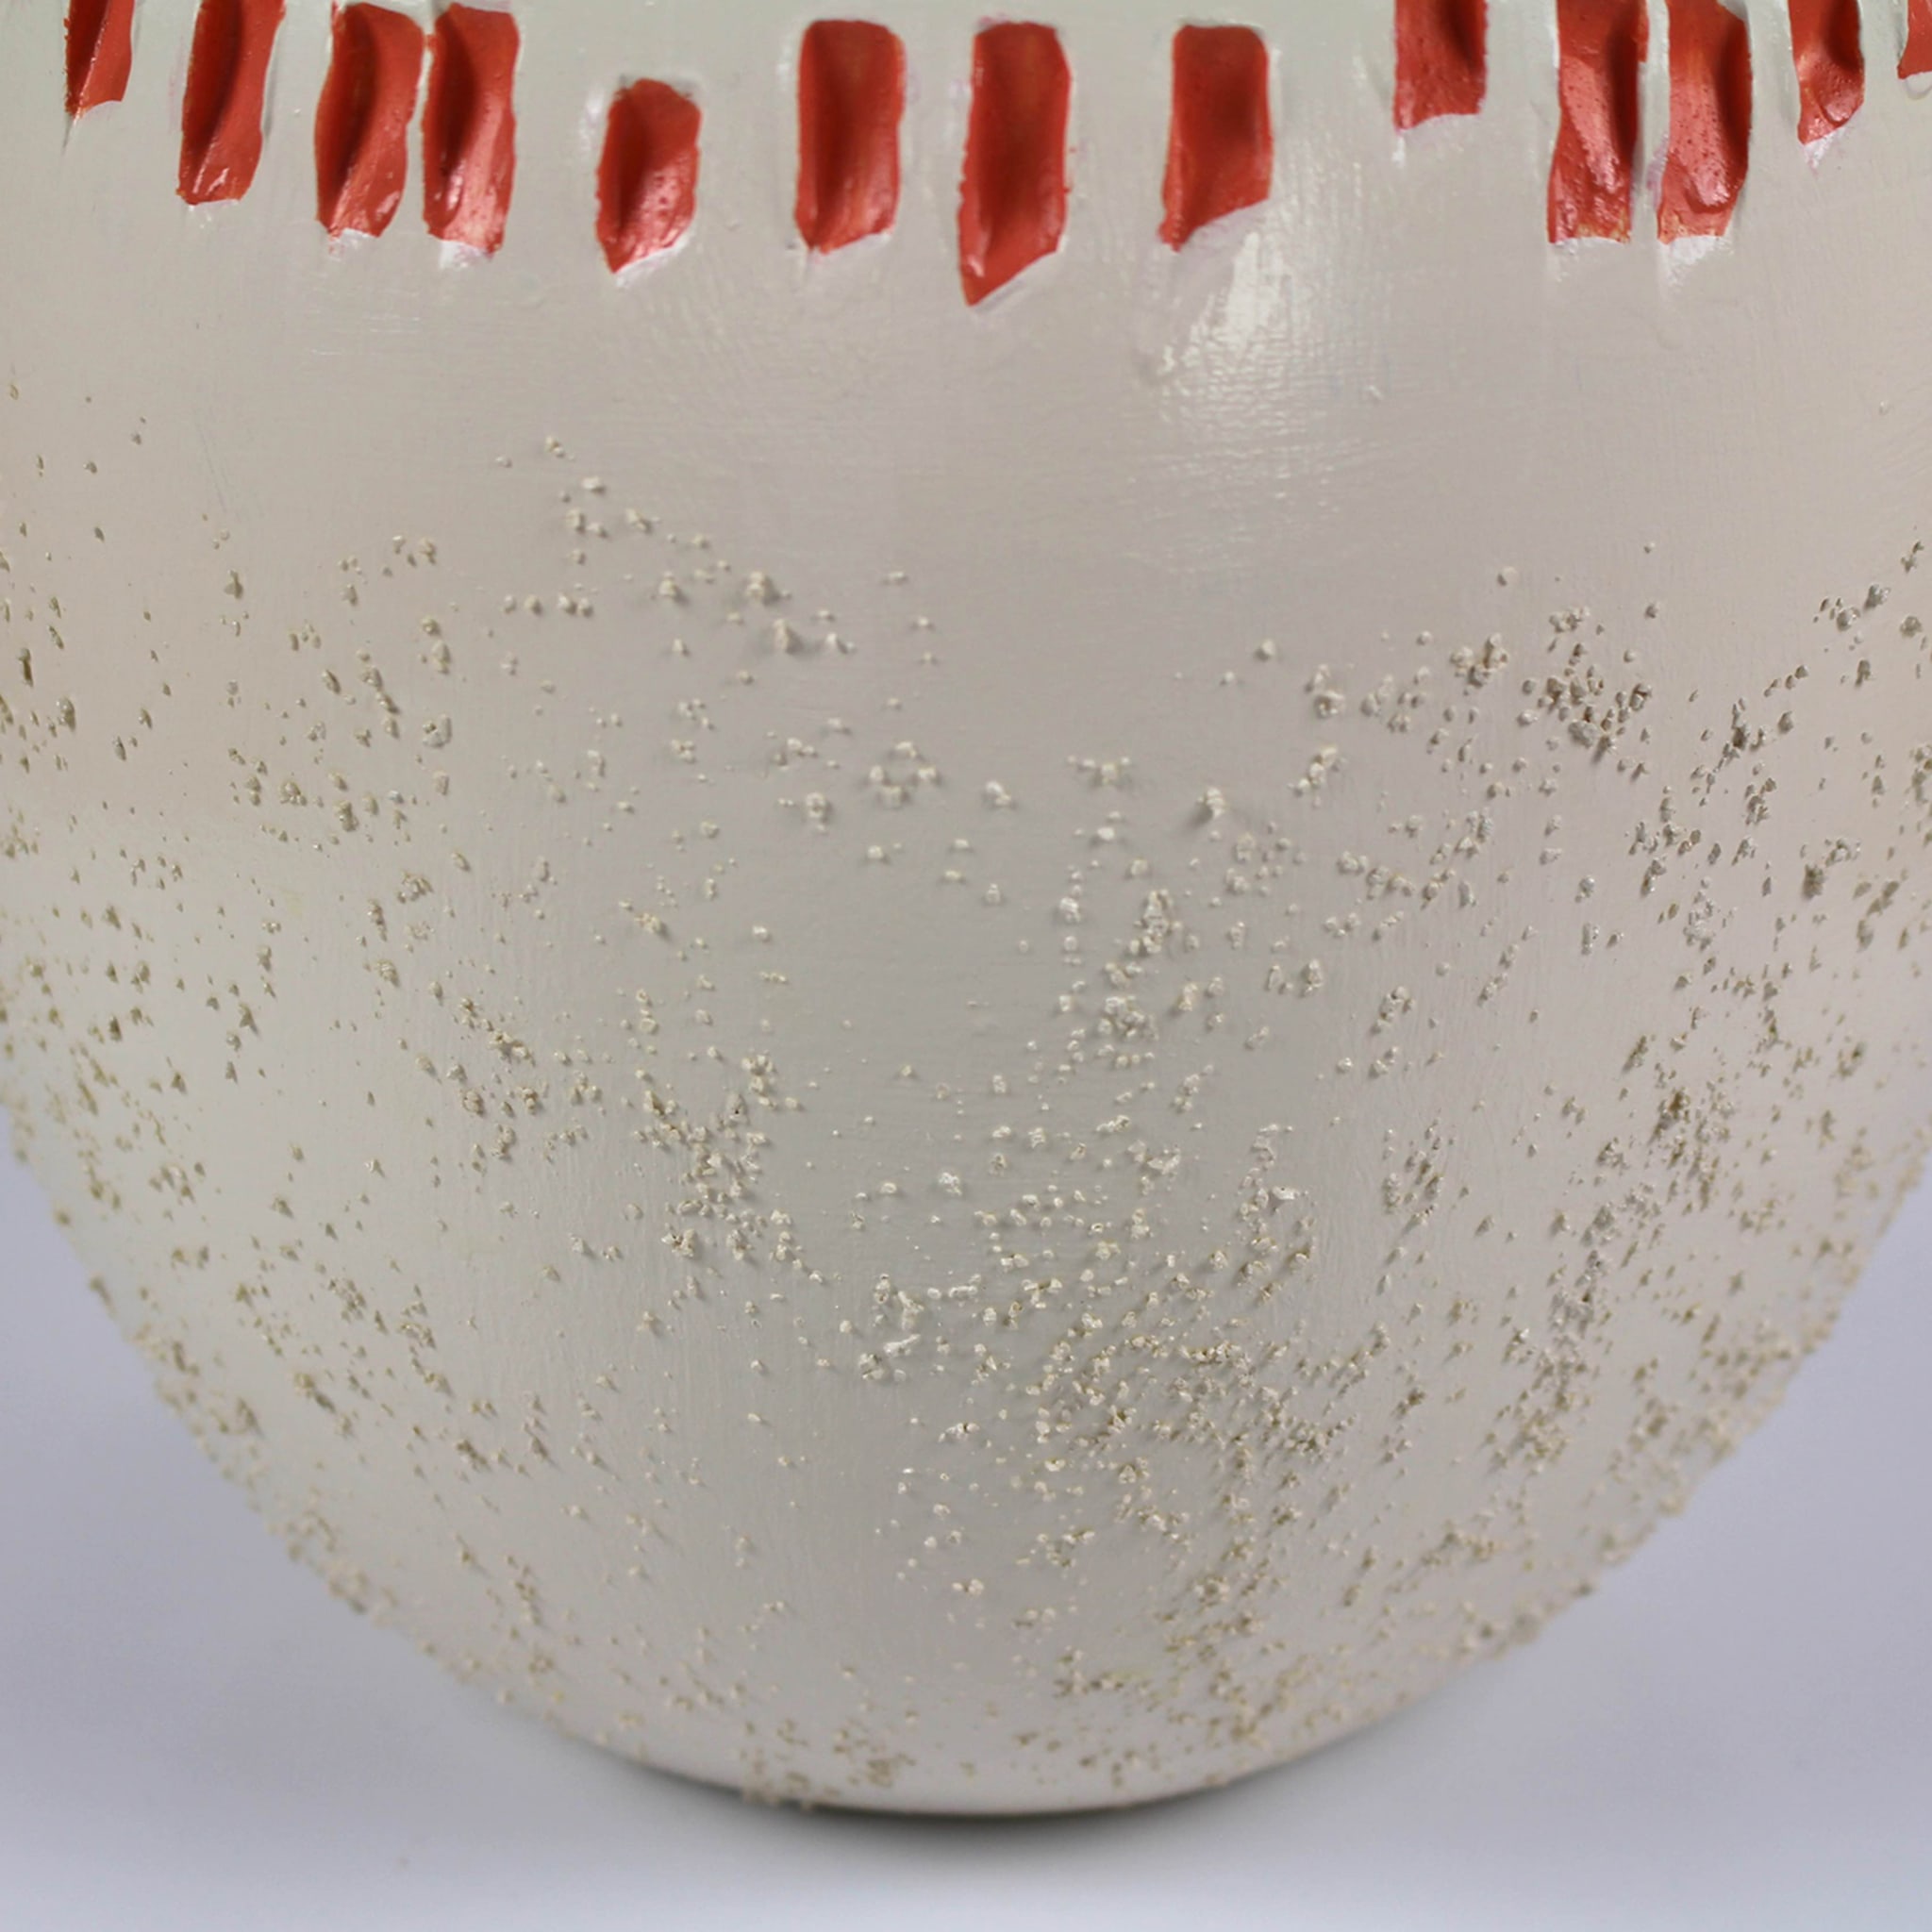 Drop-Shaped Beige & Red Vase 17 by Mascia Meccani - Alternative view 4